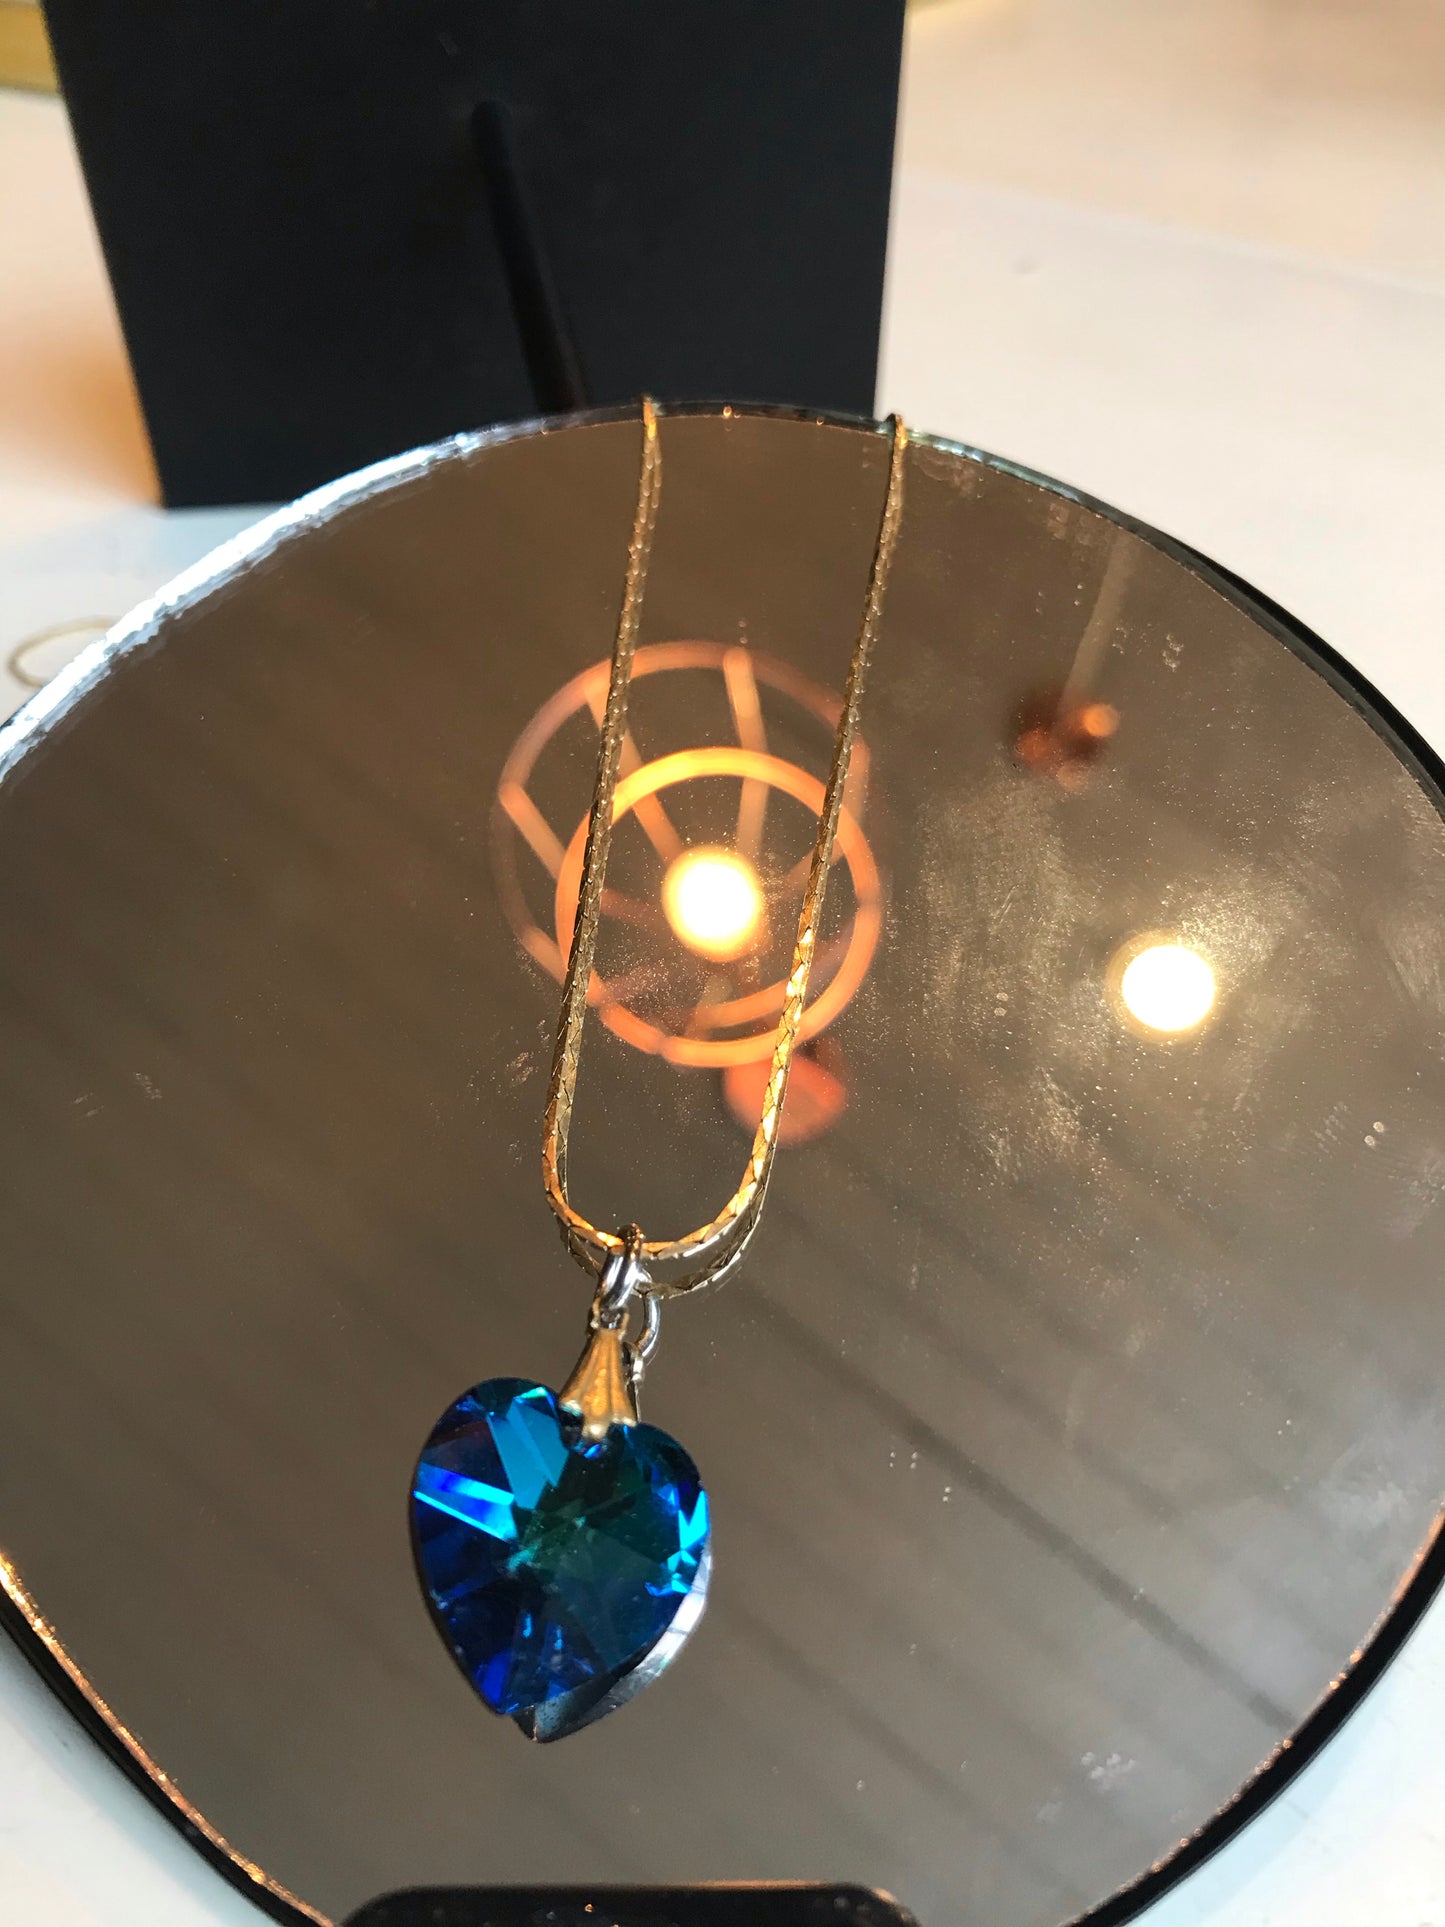 Turquoise Swarovski Heart Pendant on Gold Chain